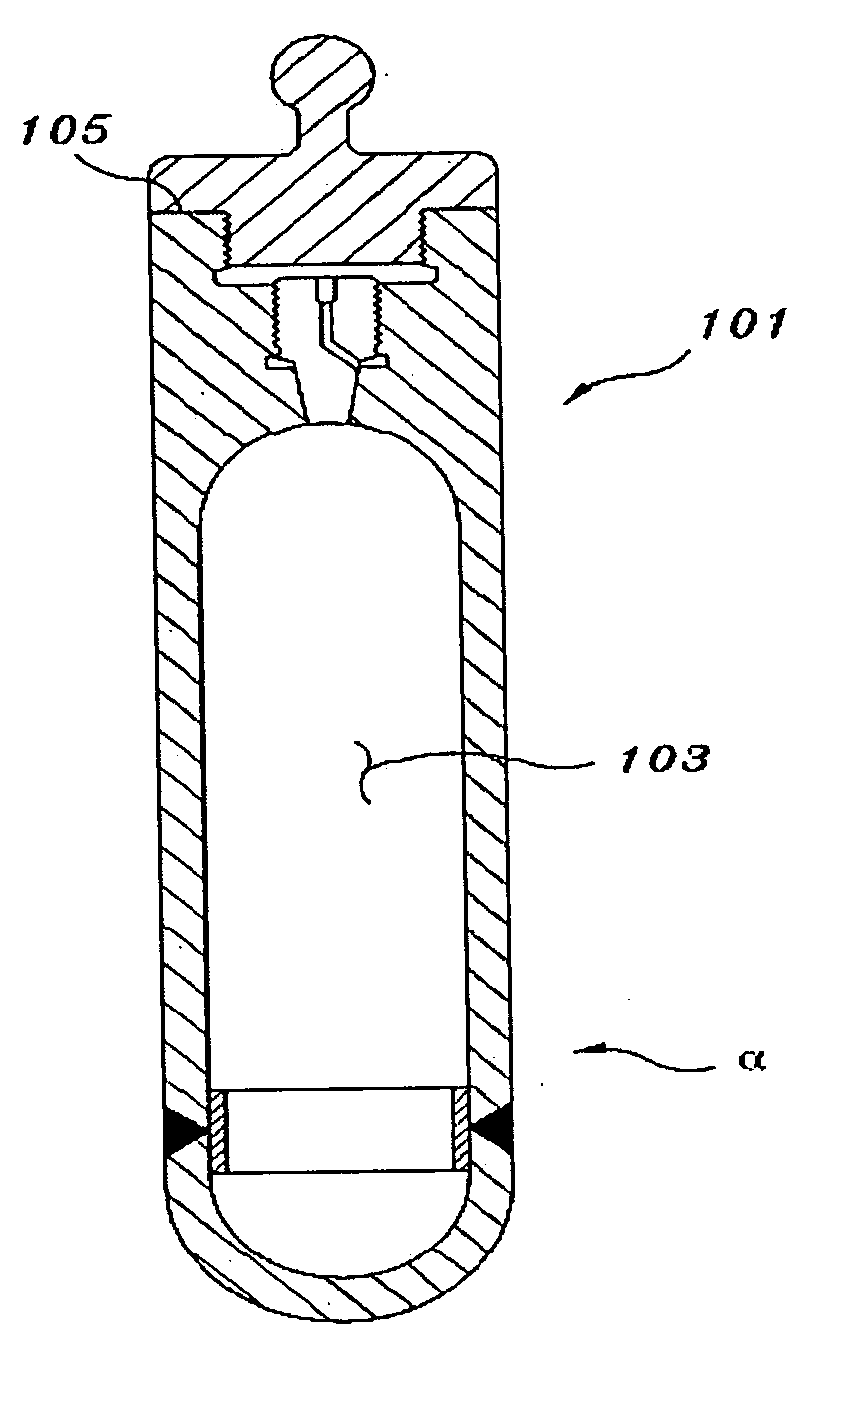 Internal circulating irradiation capsule for iodine-125 and method of producing iodine-125 using same